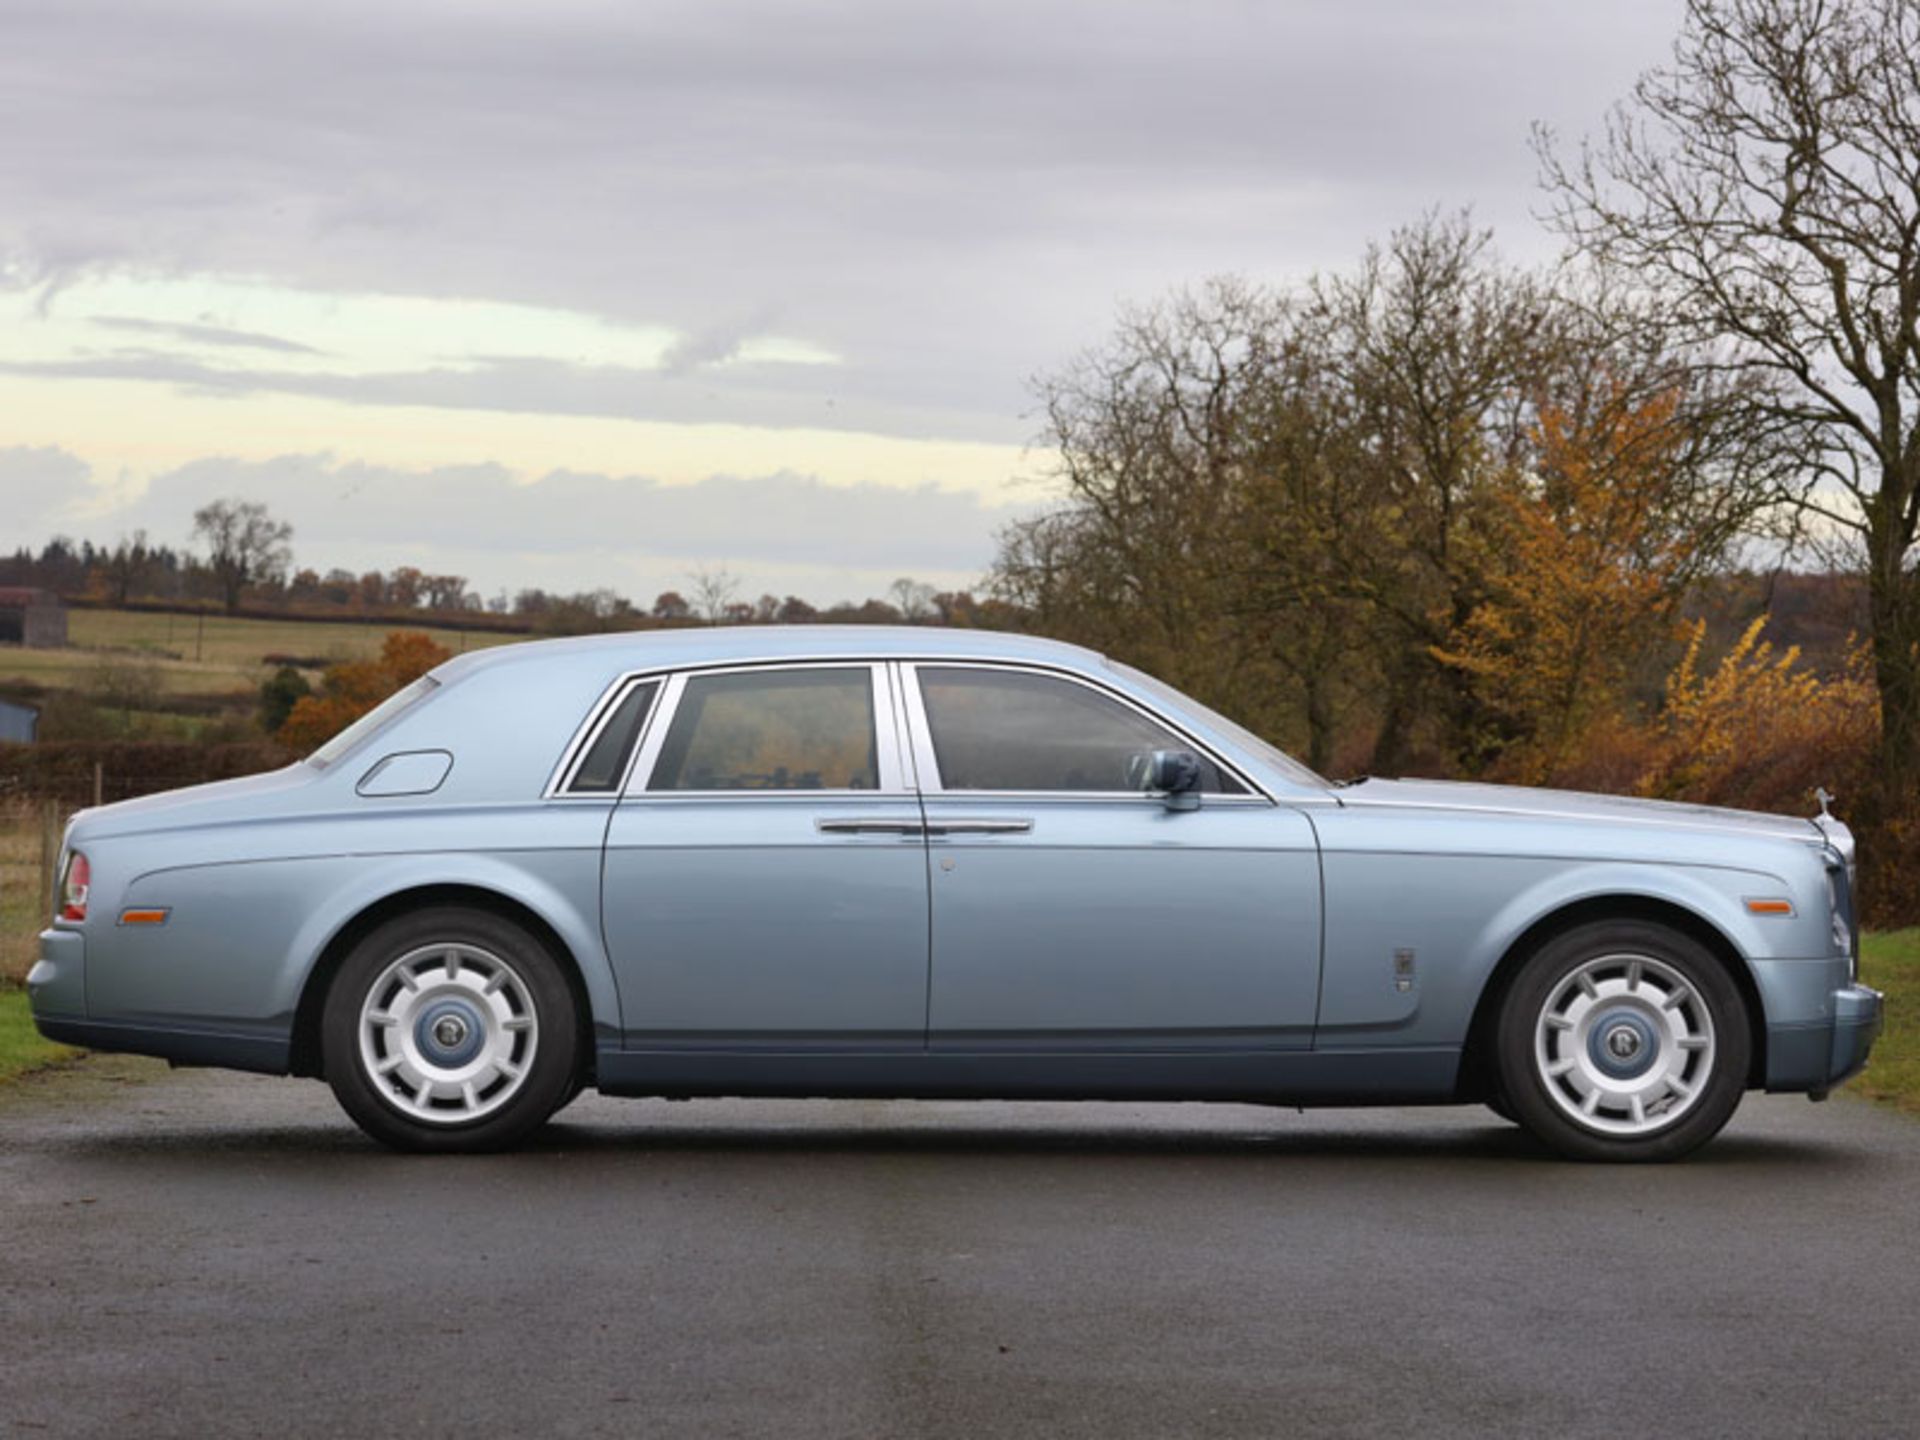 2003 Rolls-Royce Phantom - Image 3 of 9